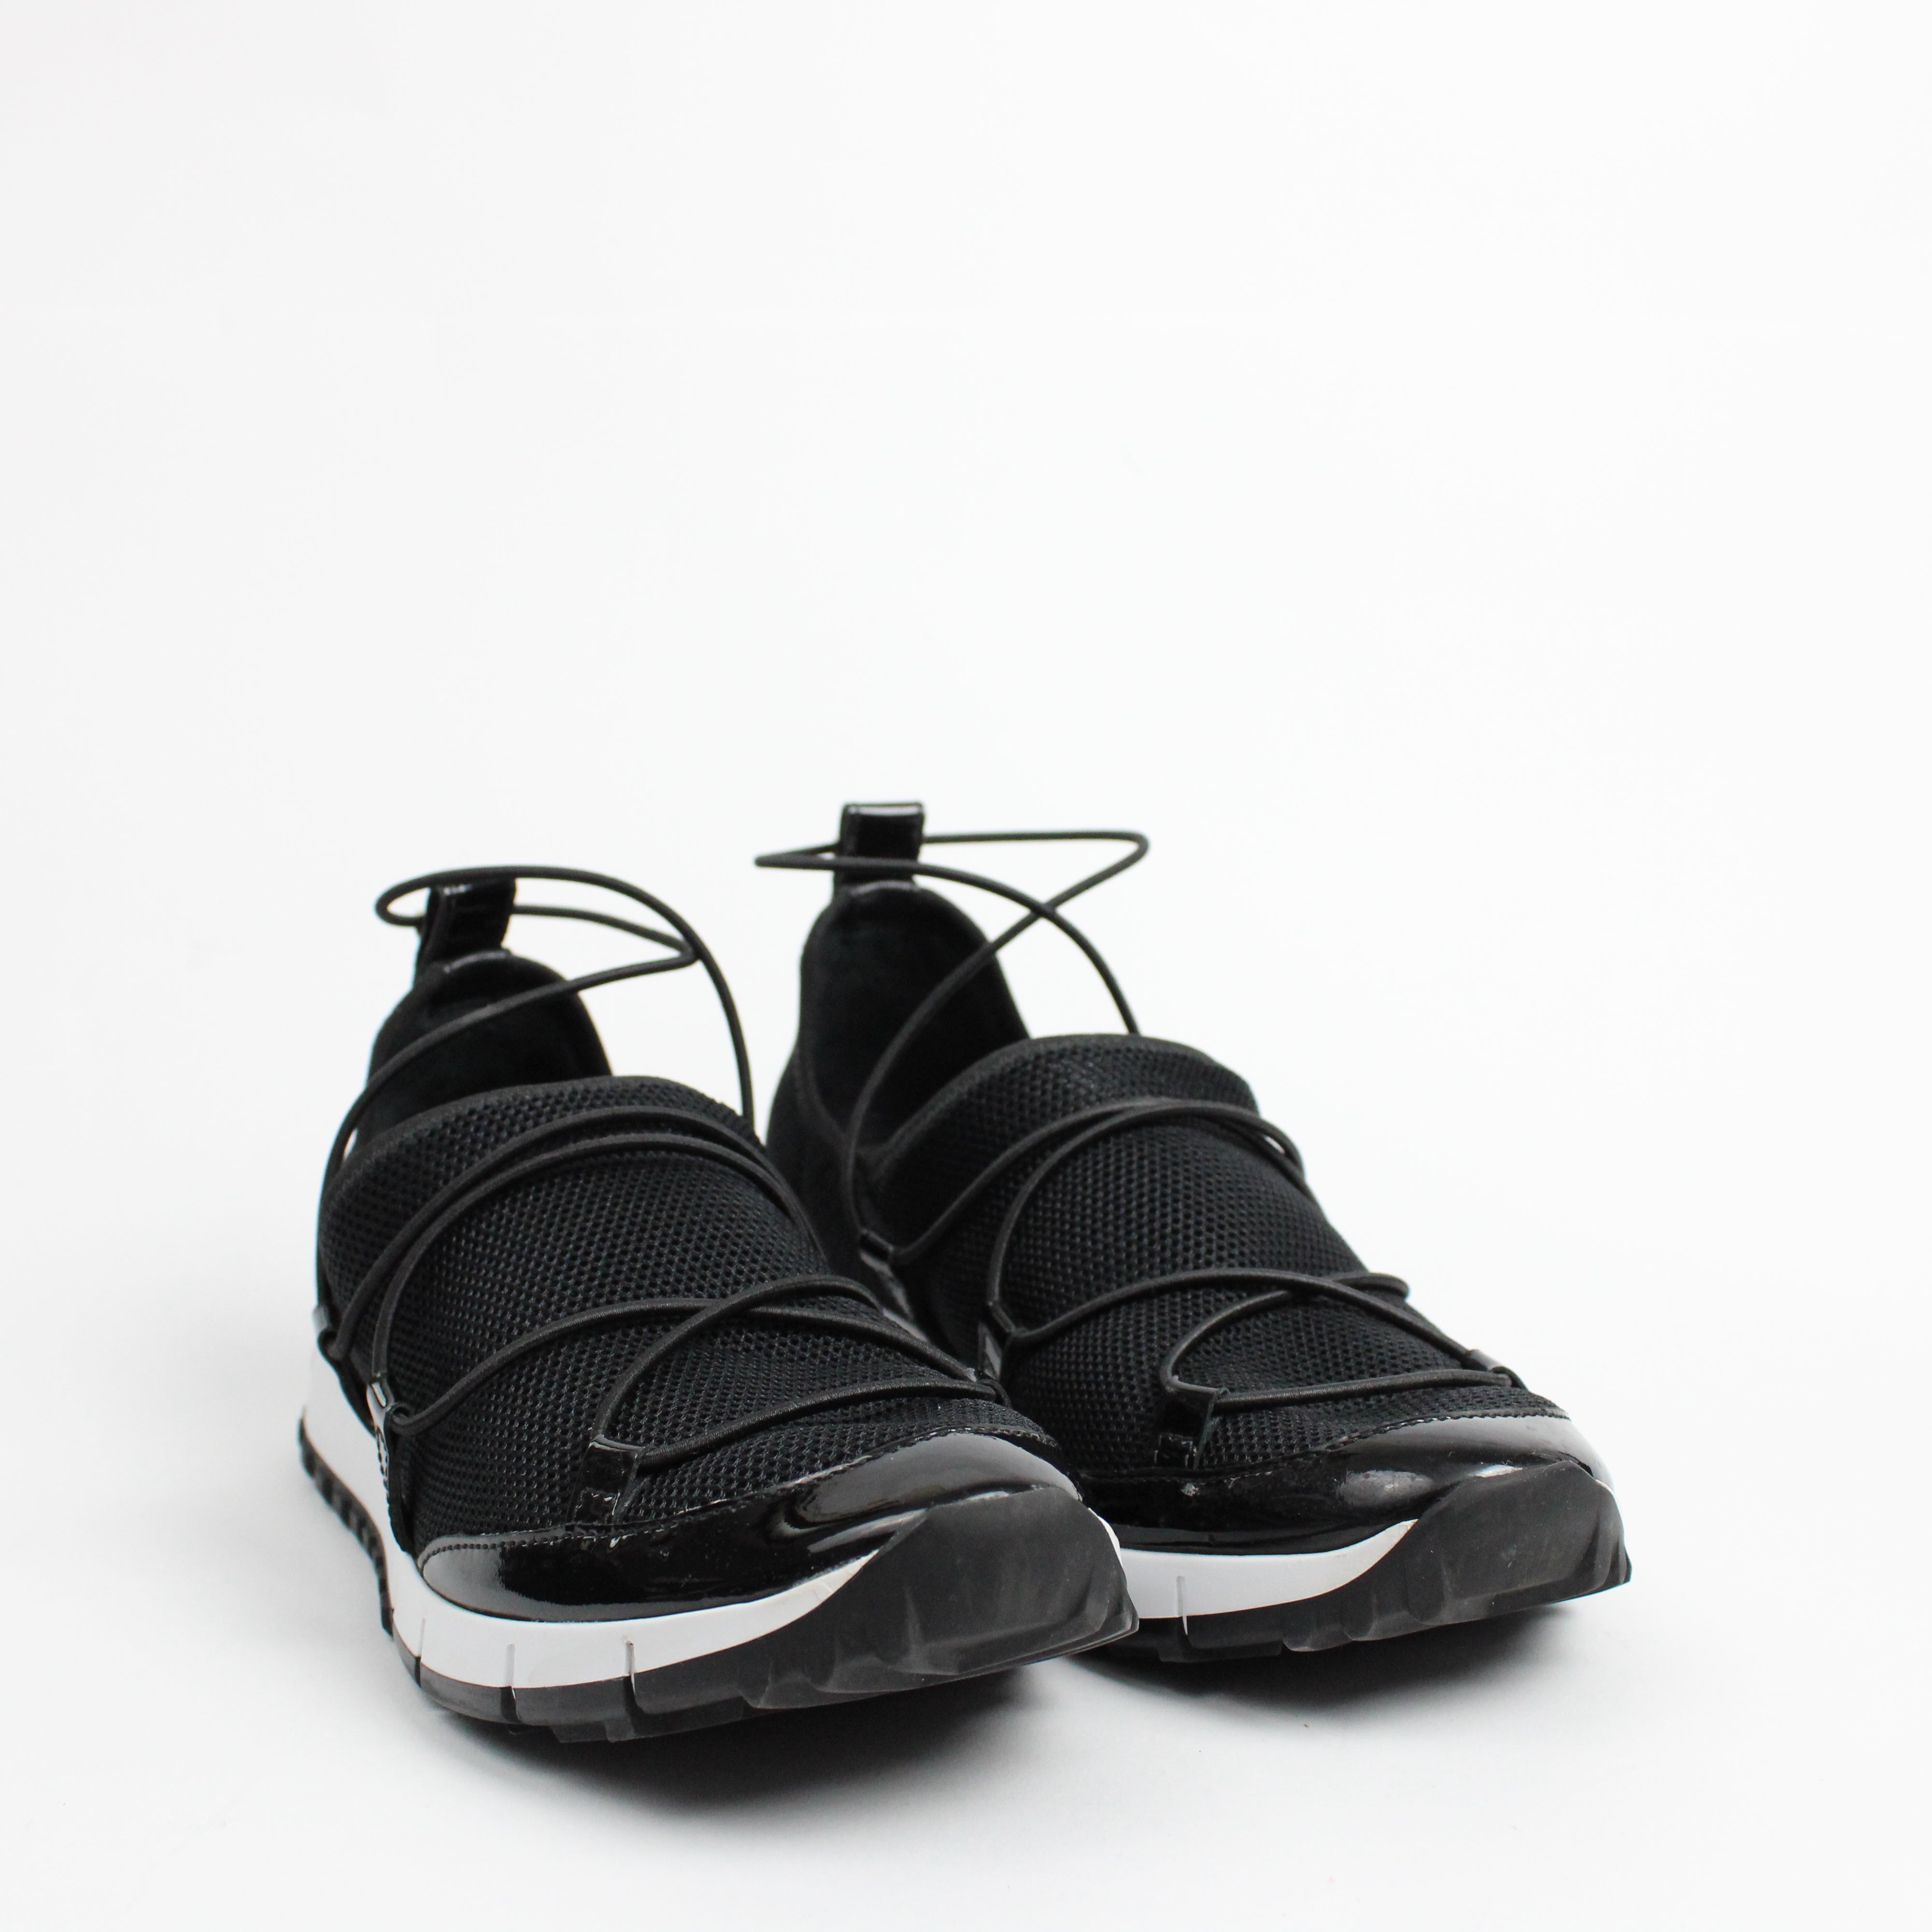 Jimmy Choo Fabric Sneakers Size 39.5